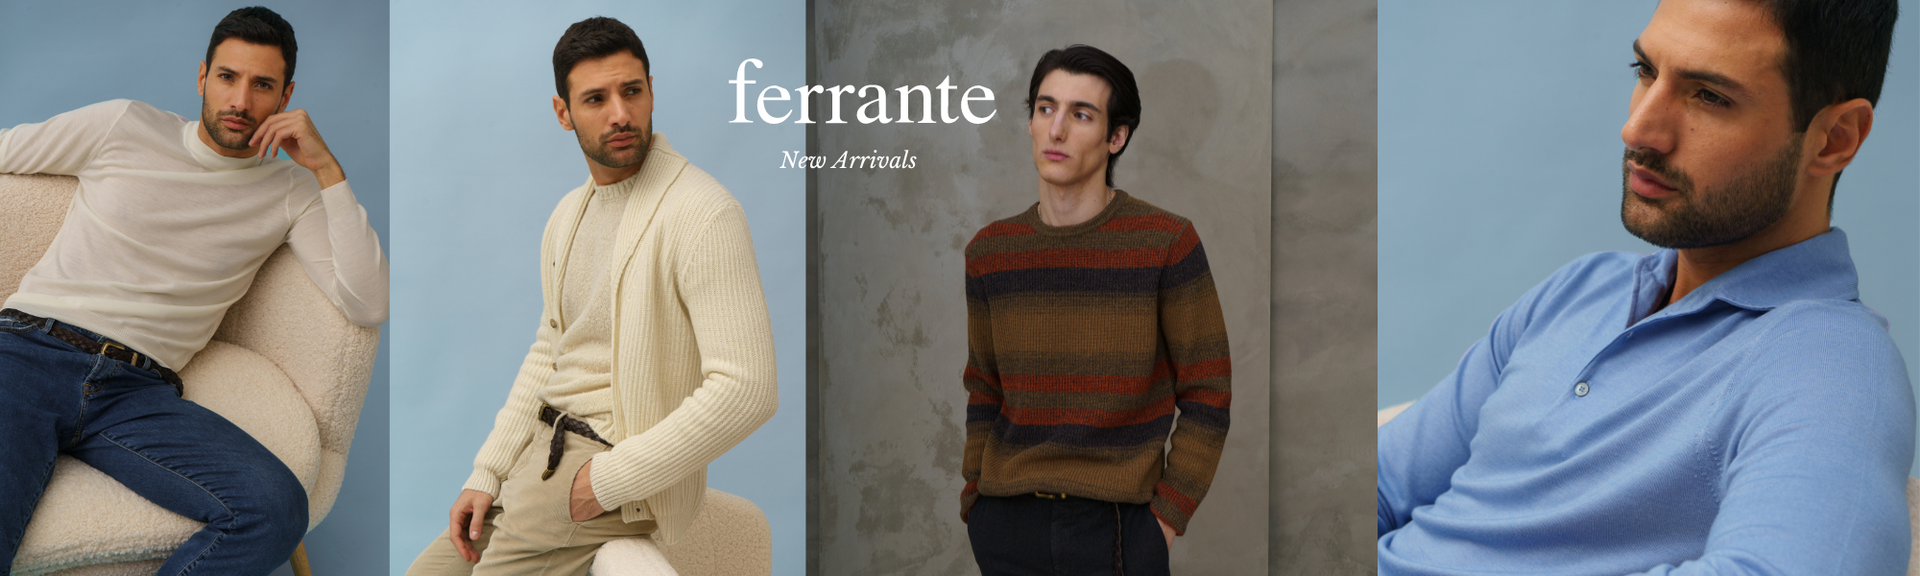 Ferrante - New Arrivals